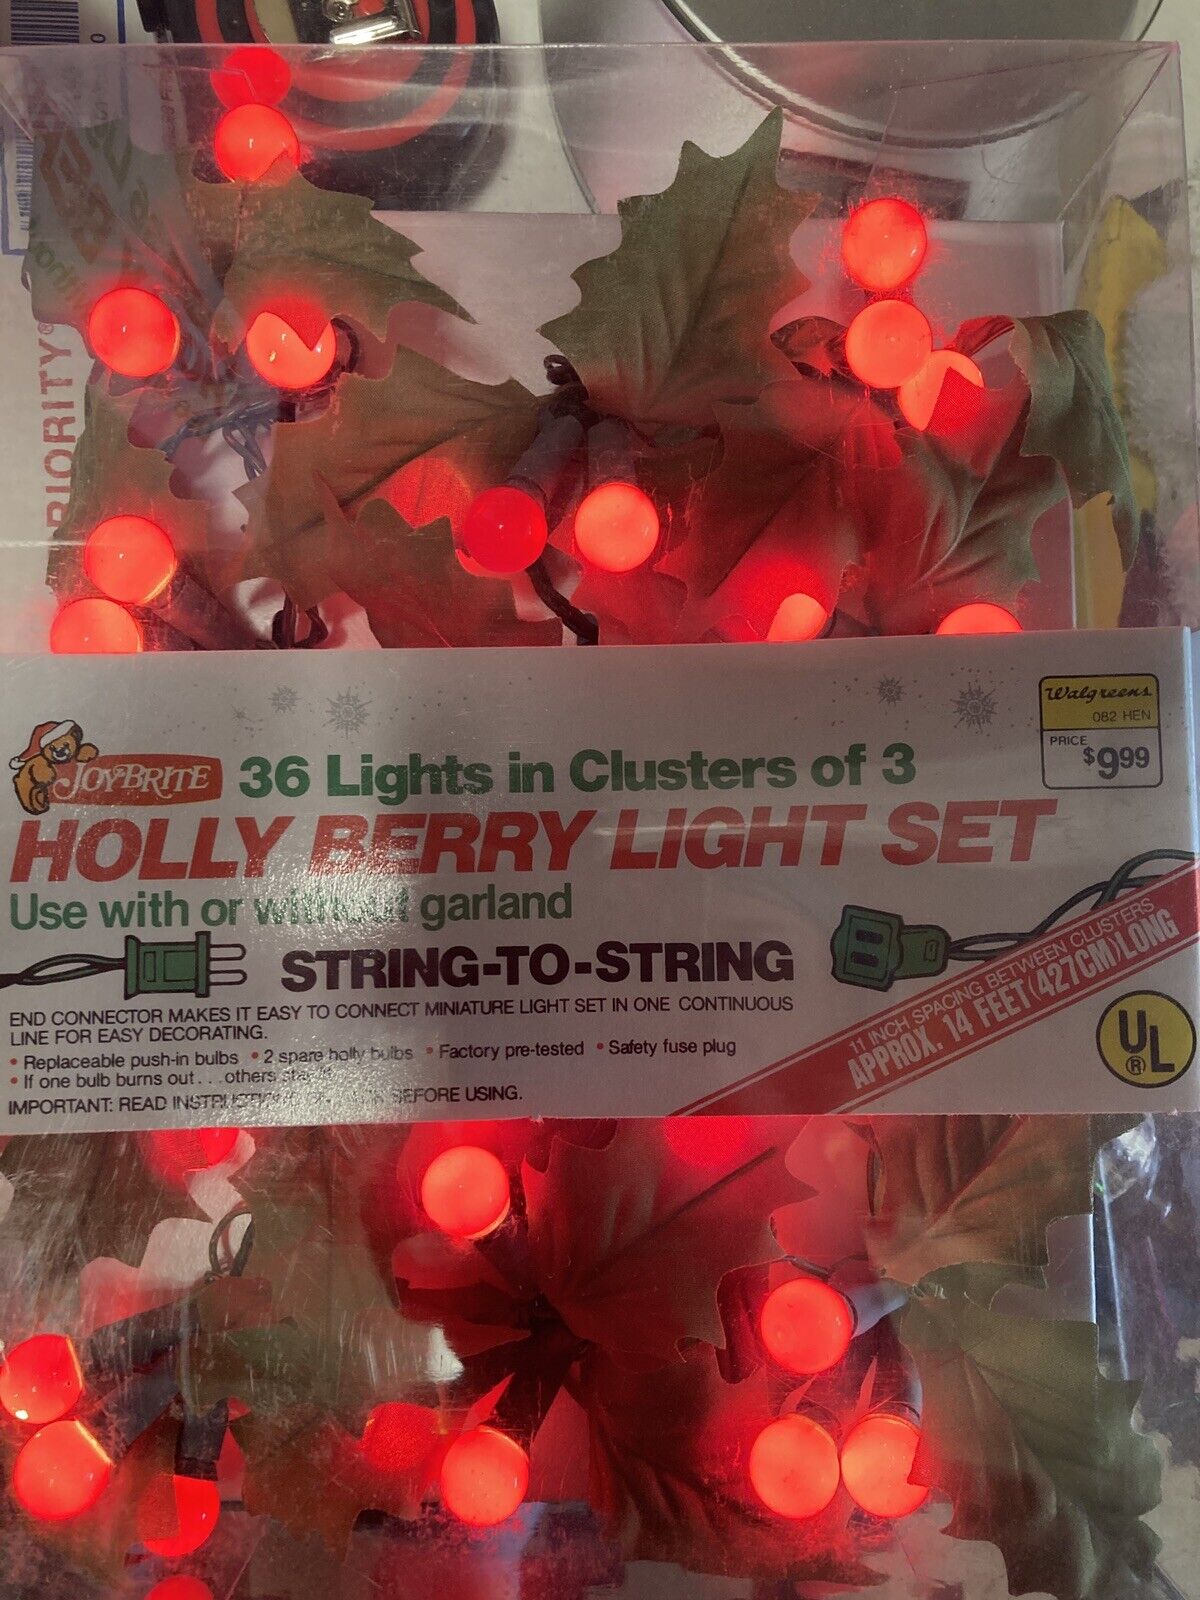 VTG JOYBRITE 36 Lights Clusters of 3 Holly Berry Light Set Holiday Decor WORKS